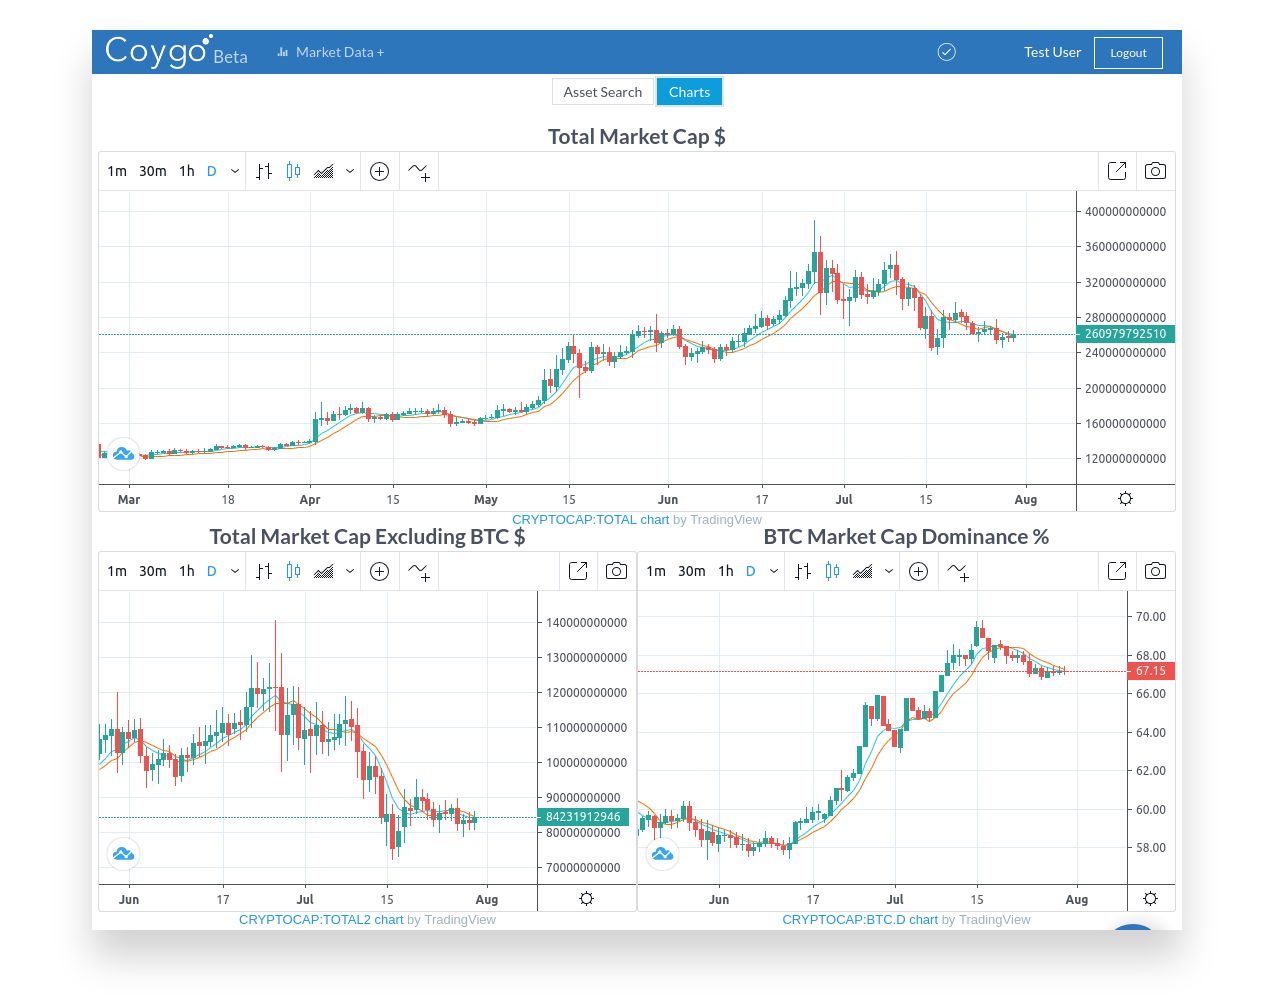 Market Data Charts view